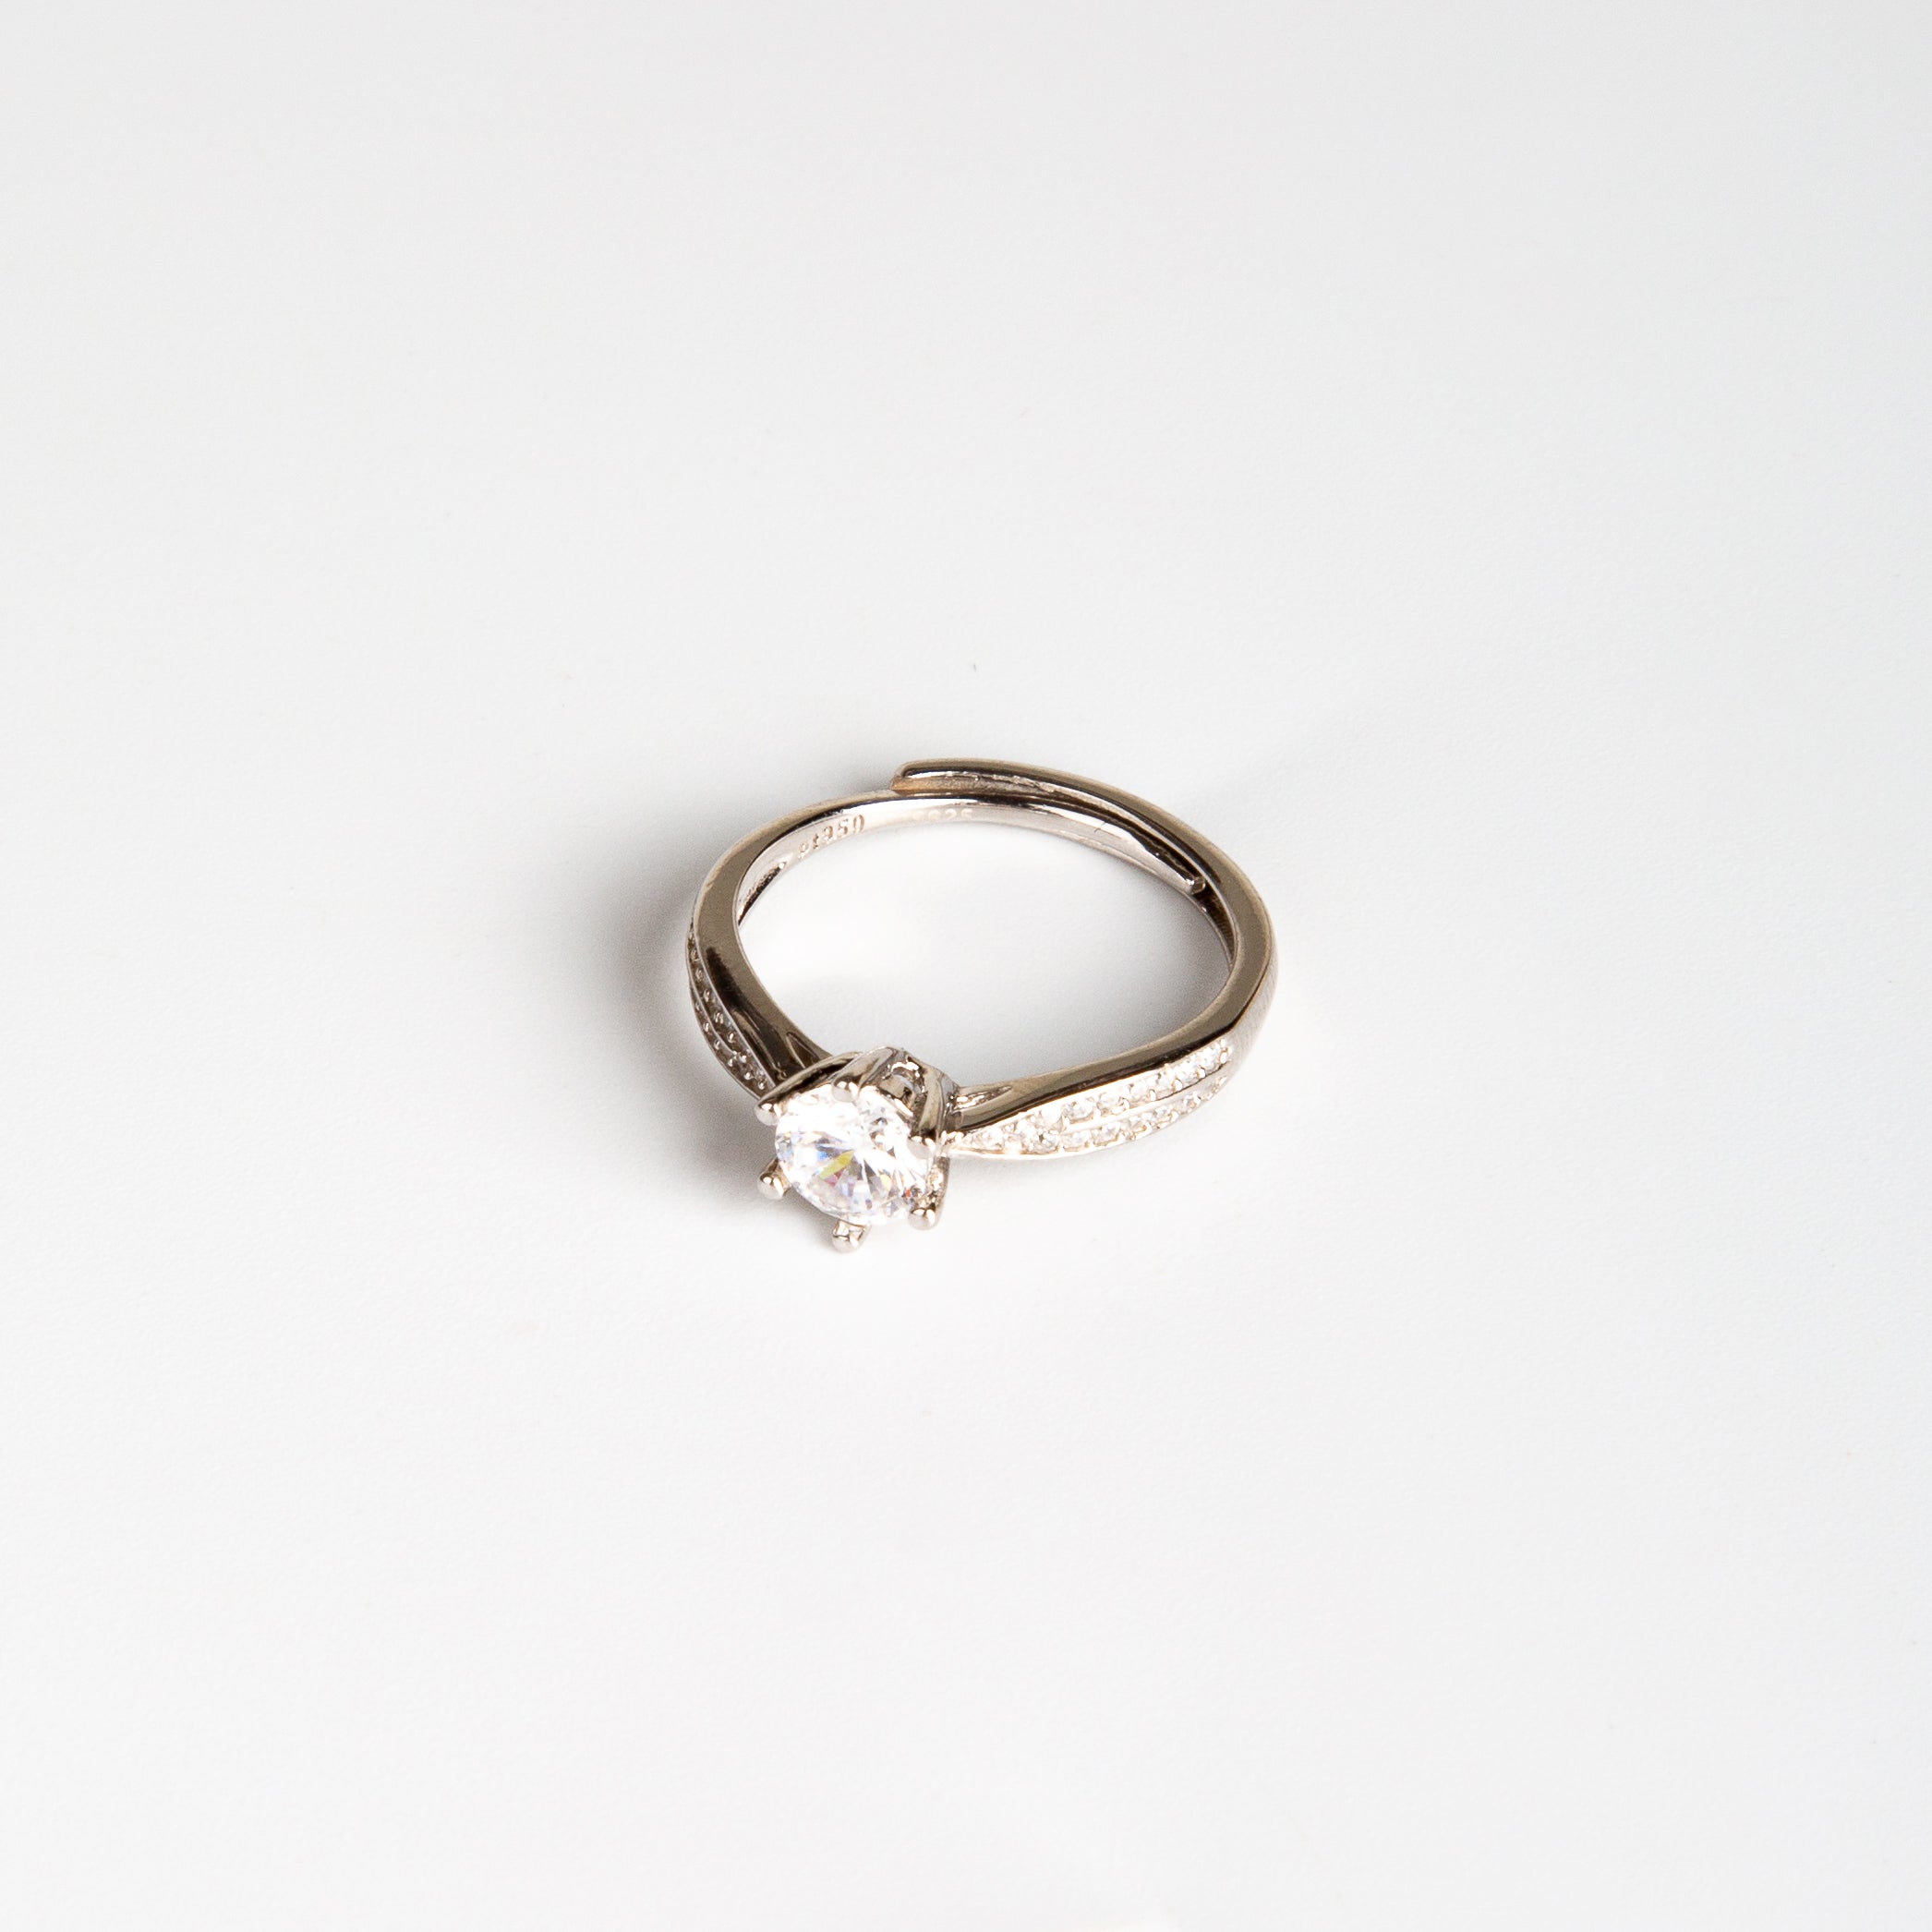 The Diamond Dust Adjustable Ring